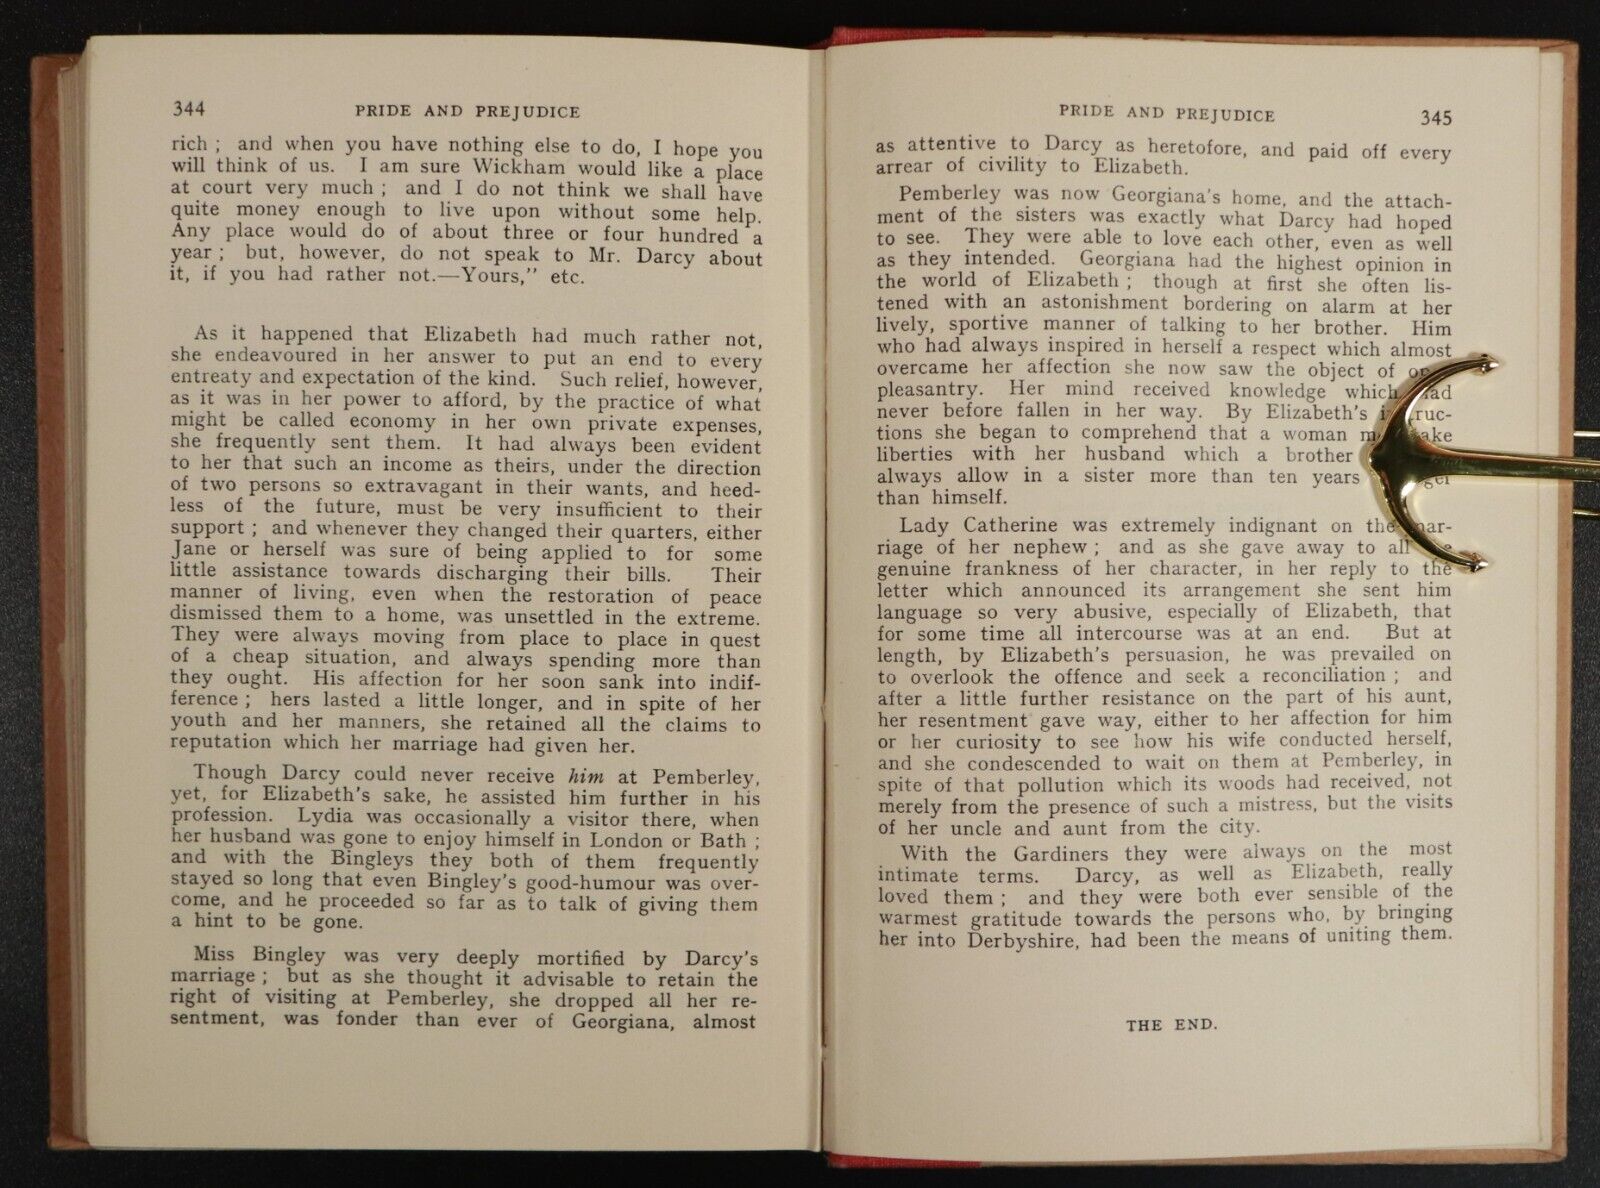 1949 Pride & Prejudice by Jane Austen British Fiction Book Female Authors